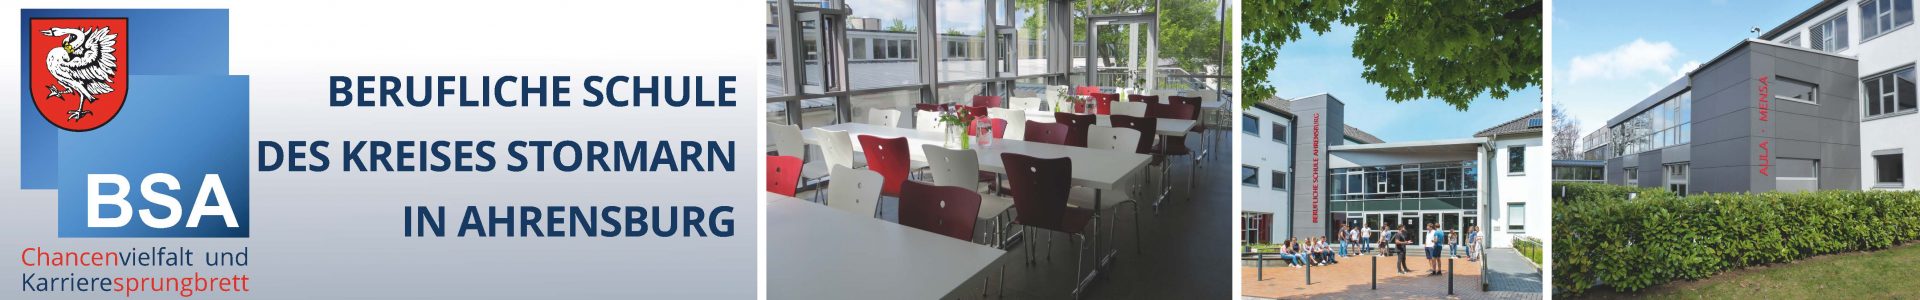 Möbelmanufaktur BS Ahrensburg stellt Pädagogische Sitzgelegenheit fertig